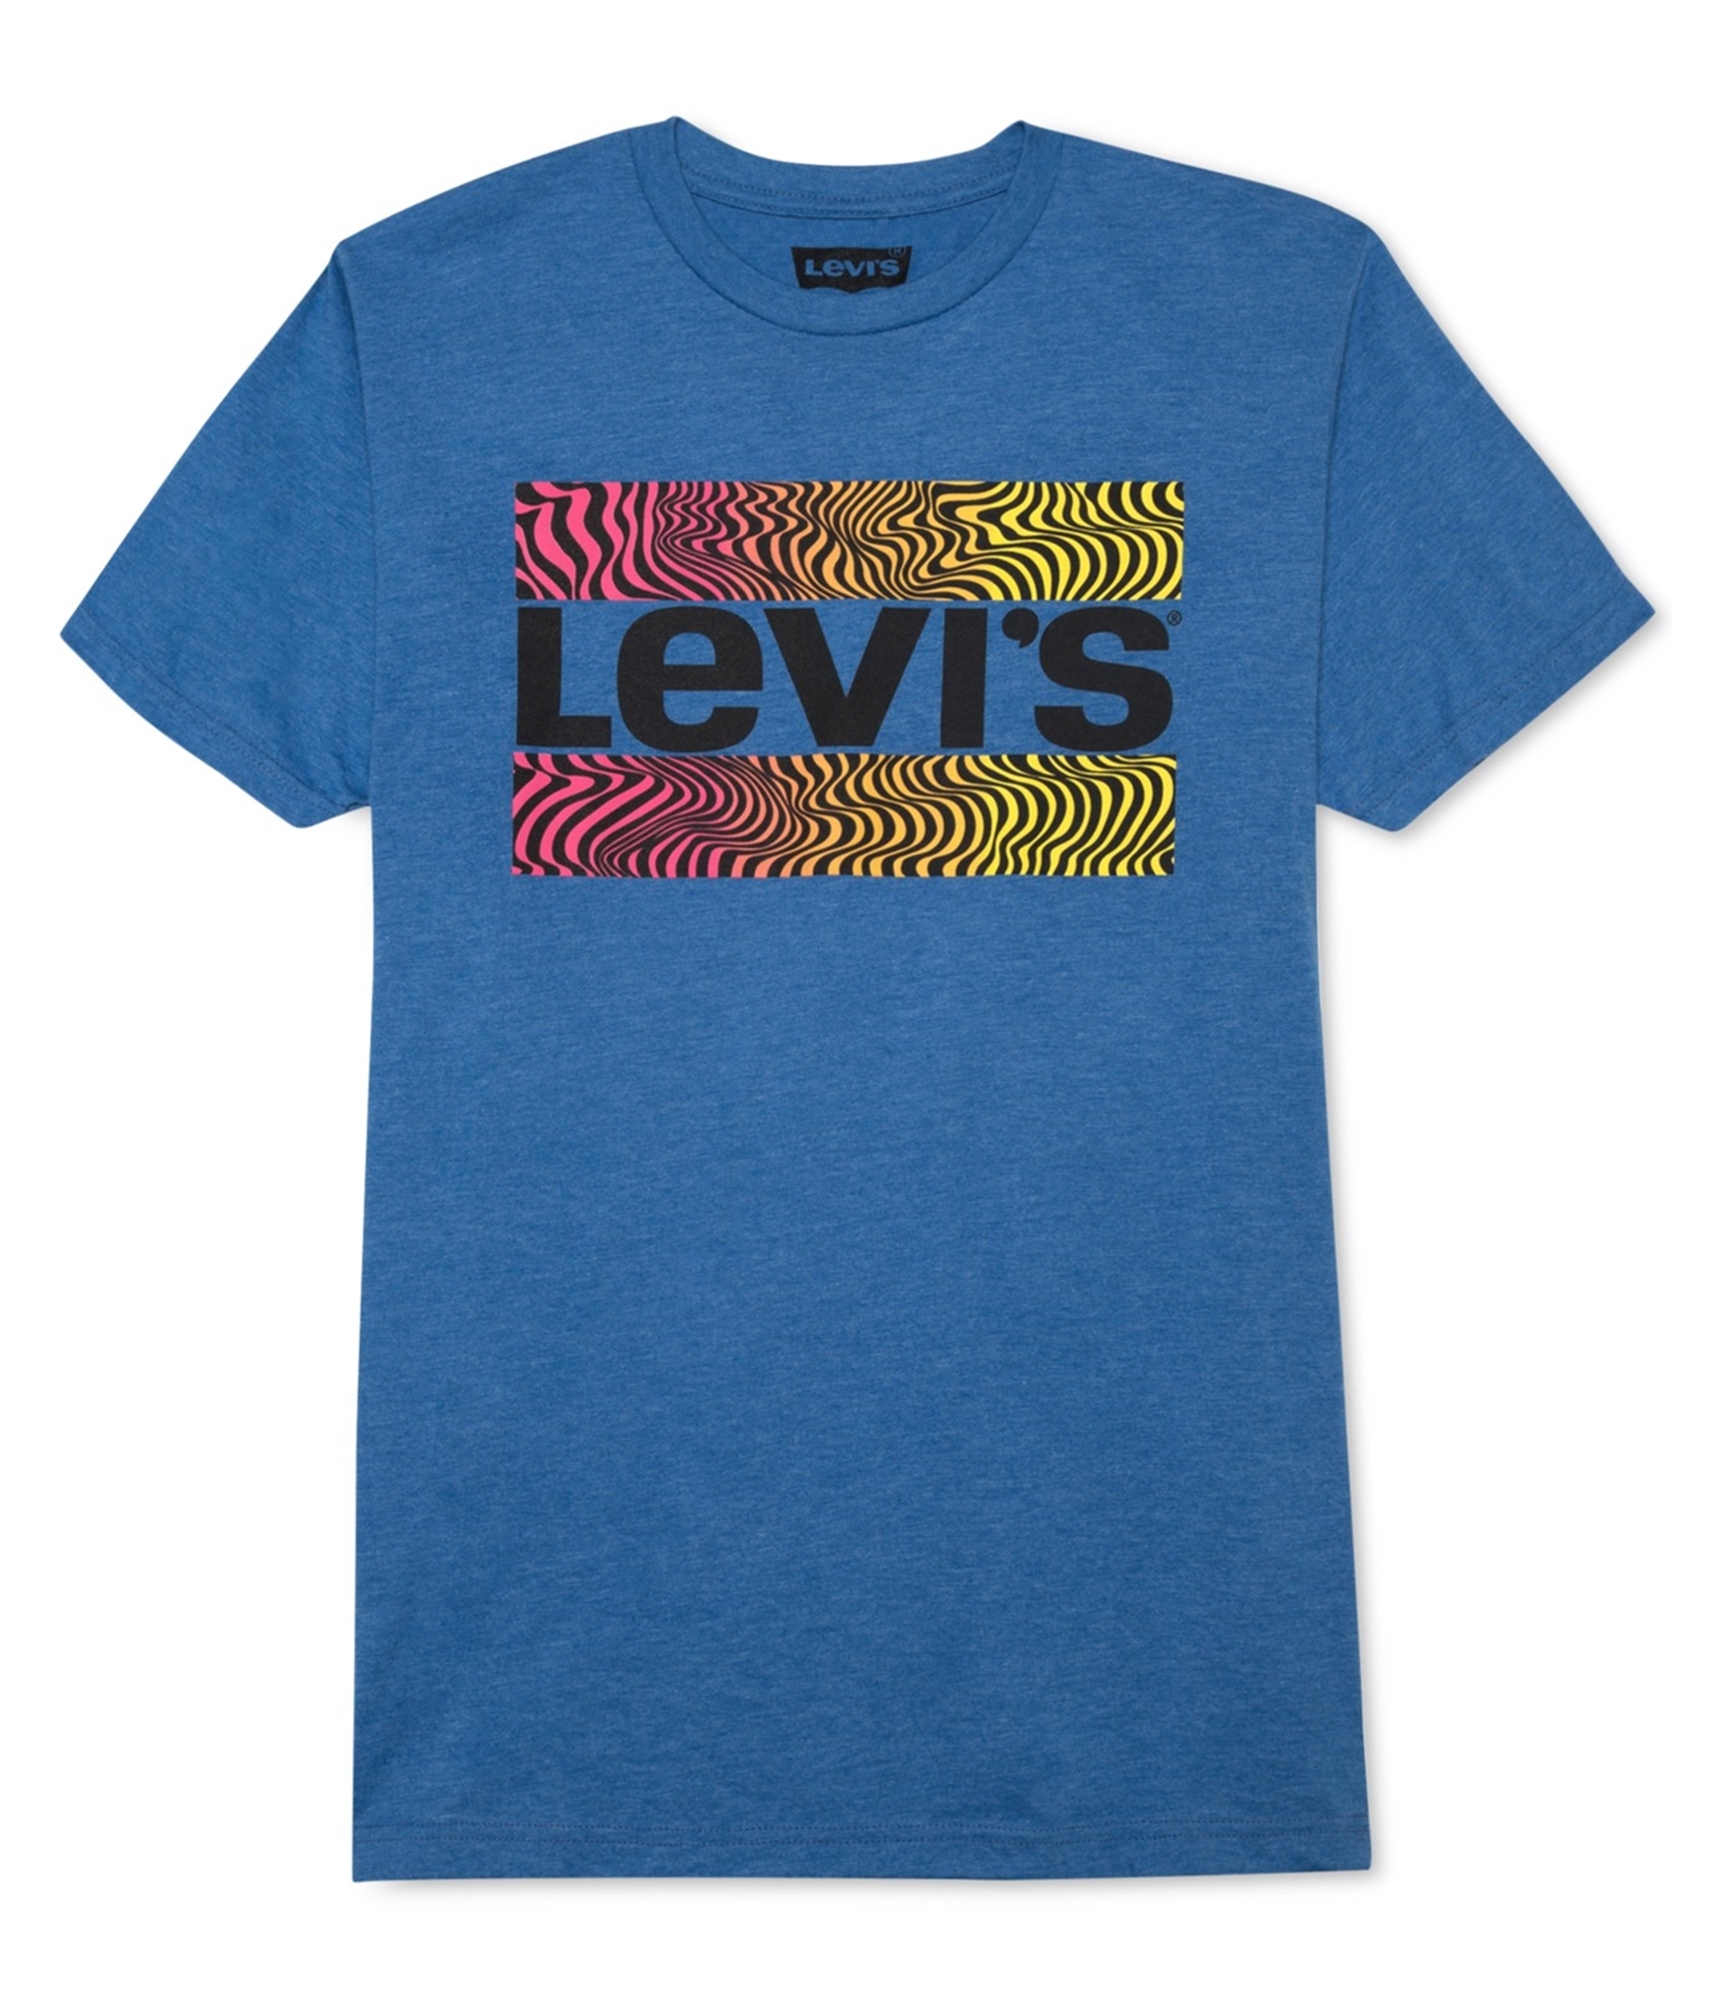 Levi's Mens Groovy Graphic T-Shirt, Blue, X-Large | eBay